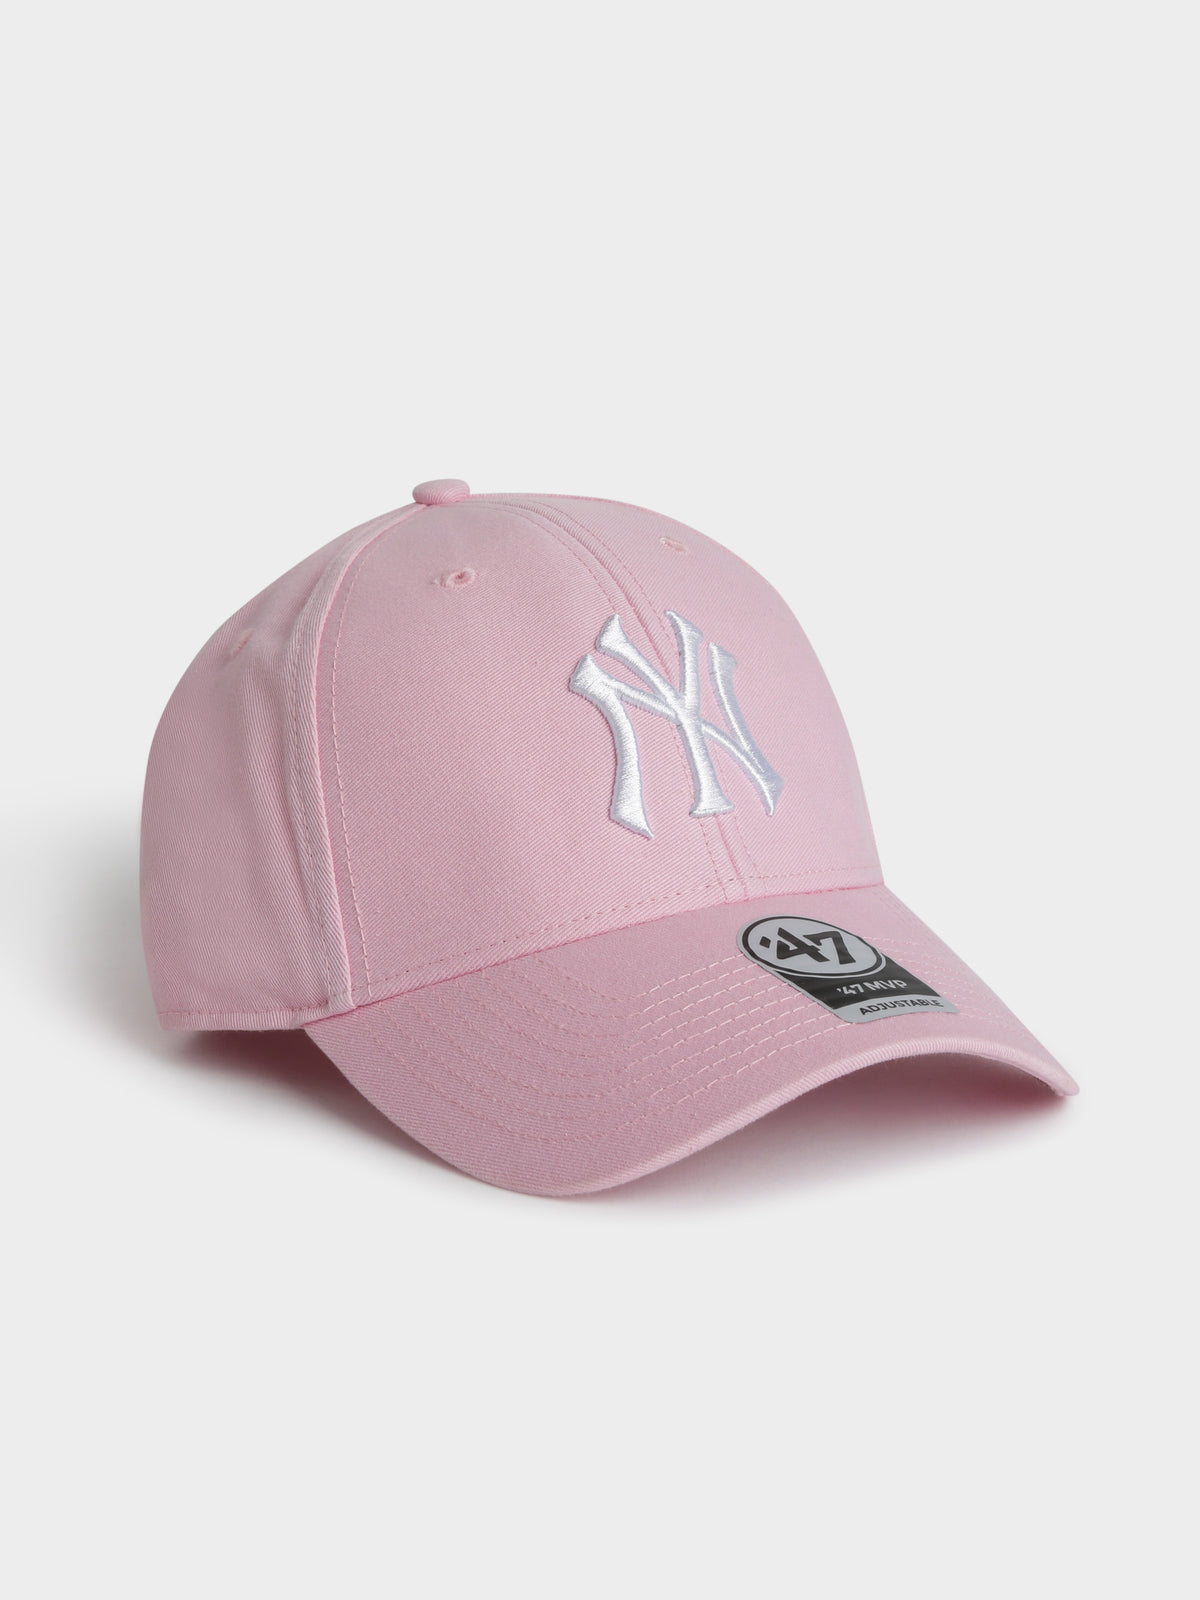 NY Yankees 47 Clean Up Cap in Petal Pink